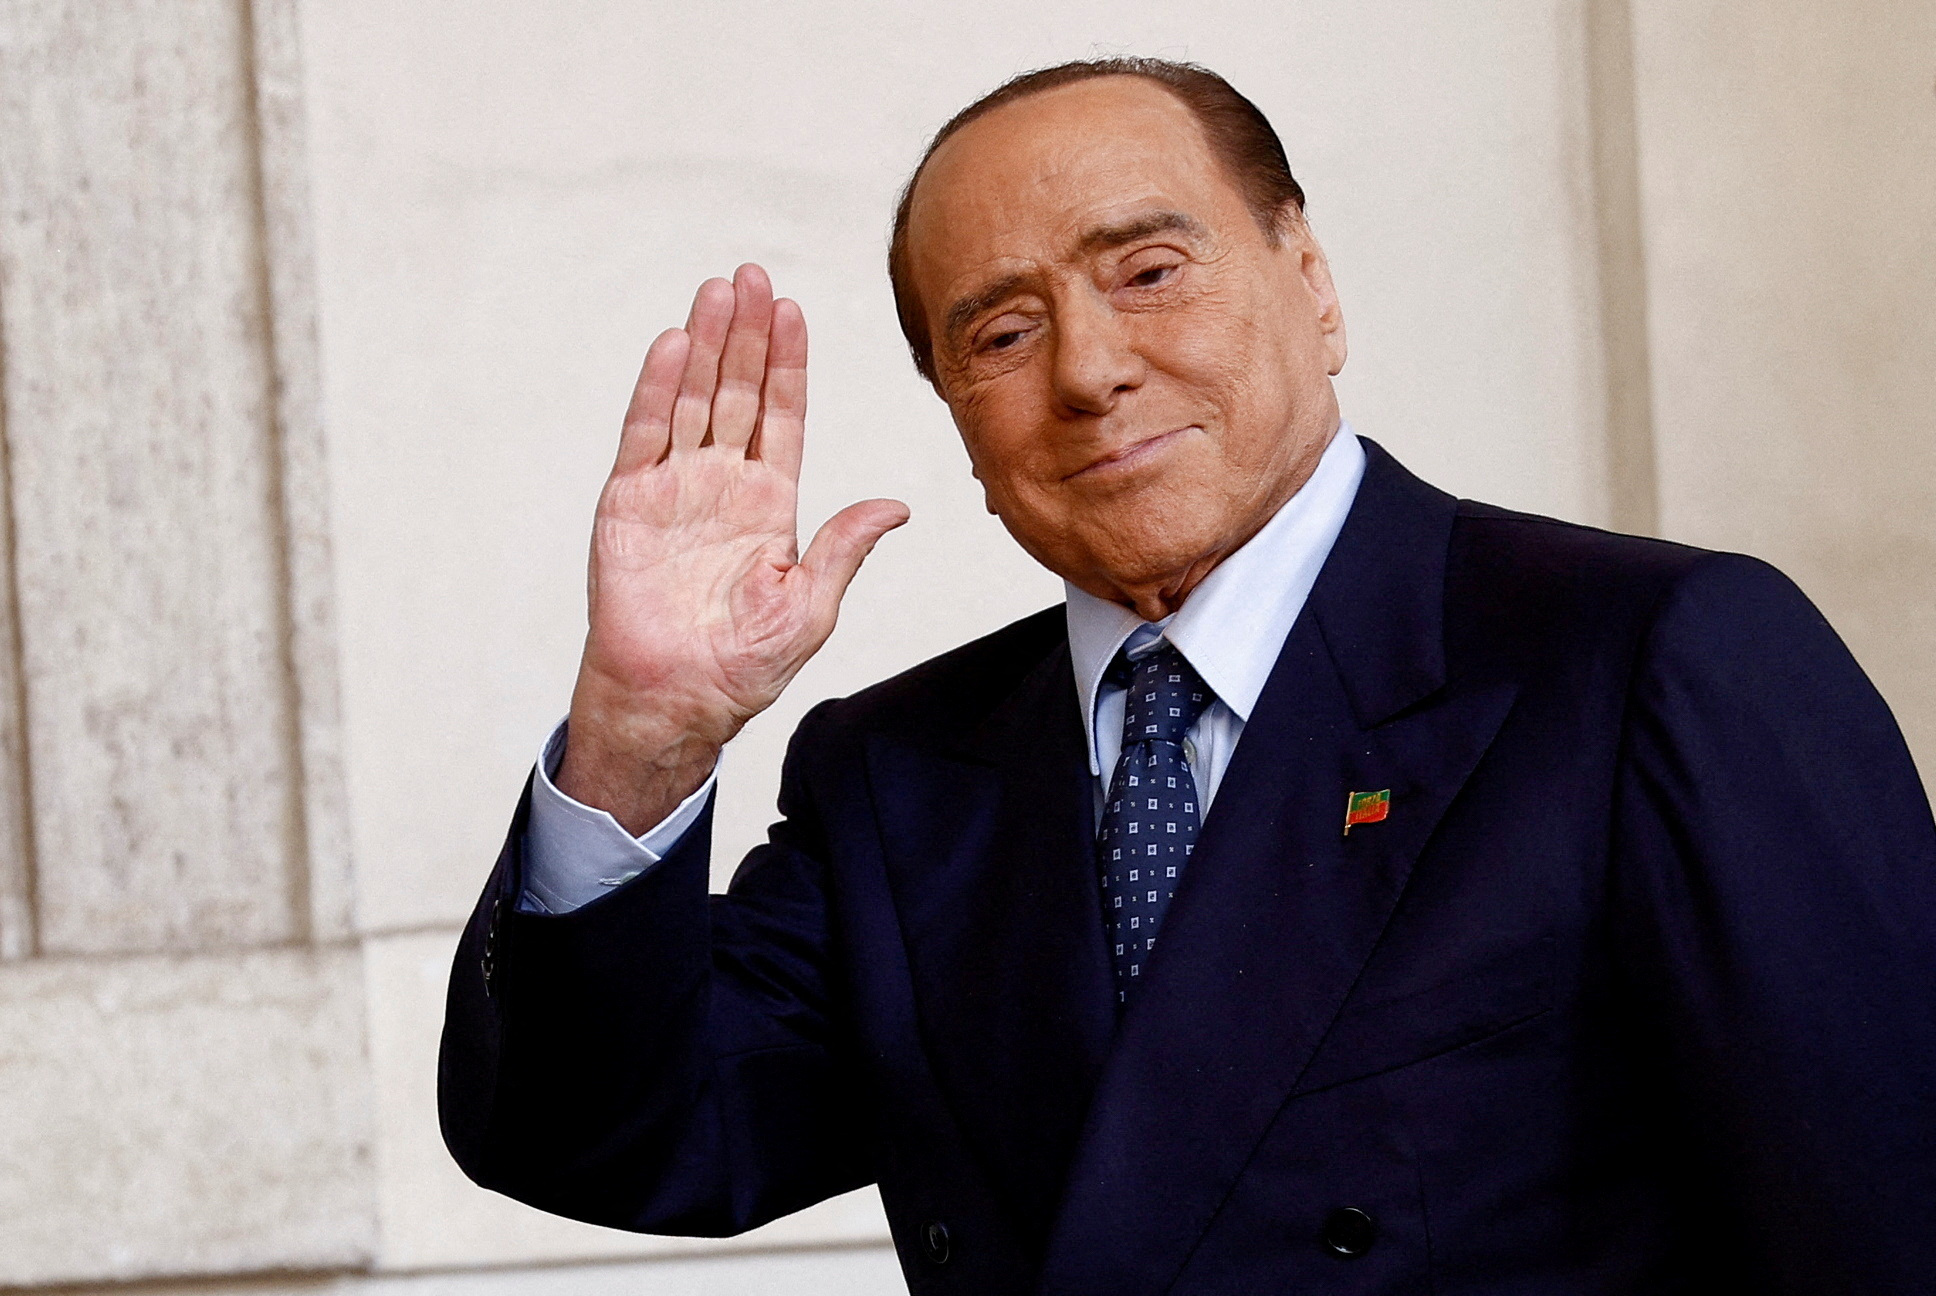 Hospitalizaron a Silvio Berlusconi para controles “programados” por su leucemia